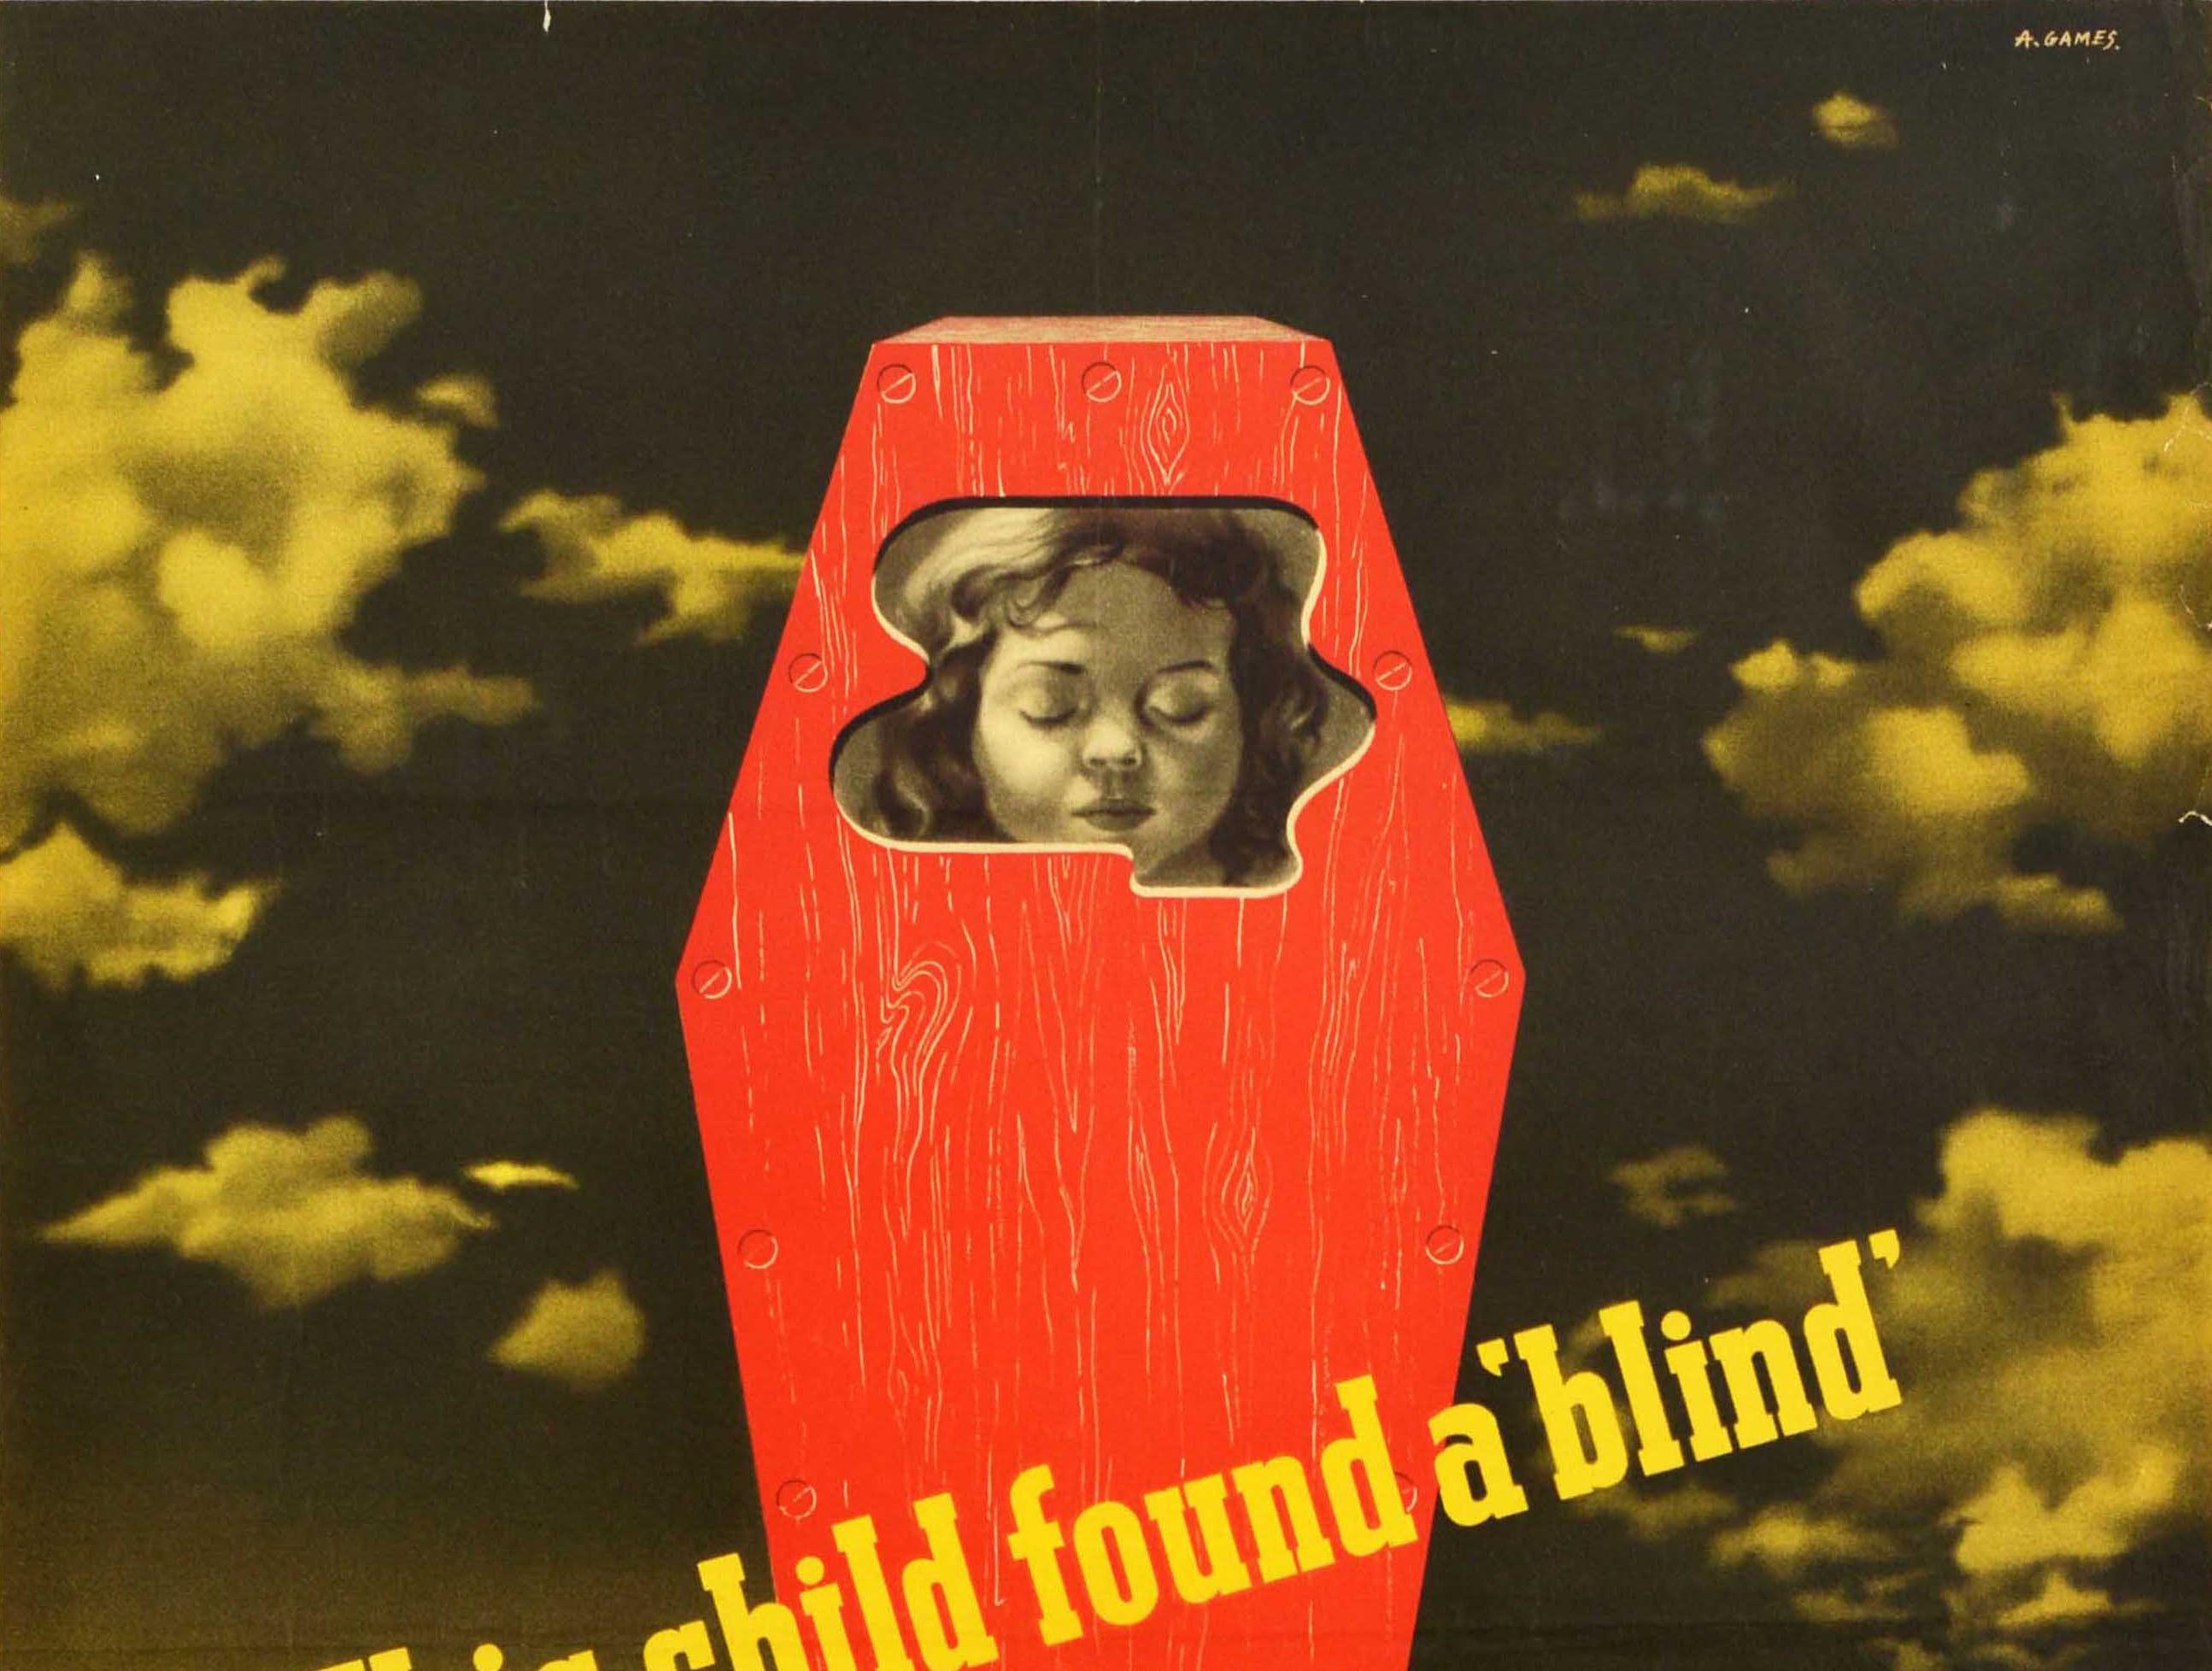 Original Vintage War Poster Child Found A Blind WWII Ammunition Shells Modernism - Print by Abram Games